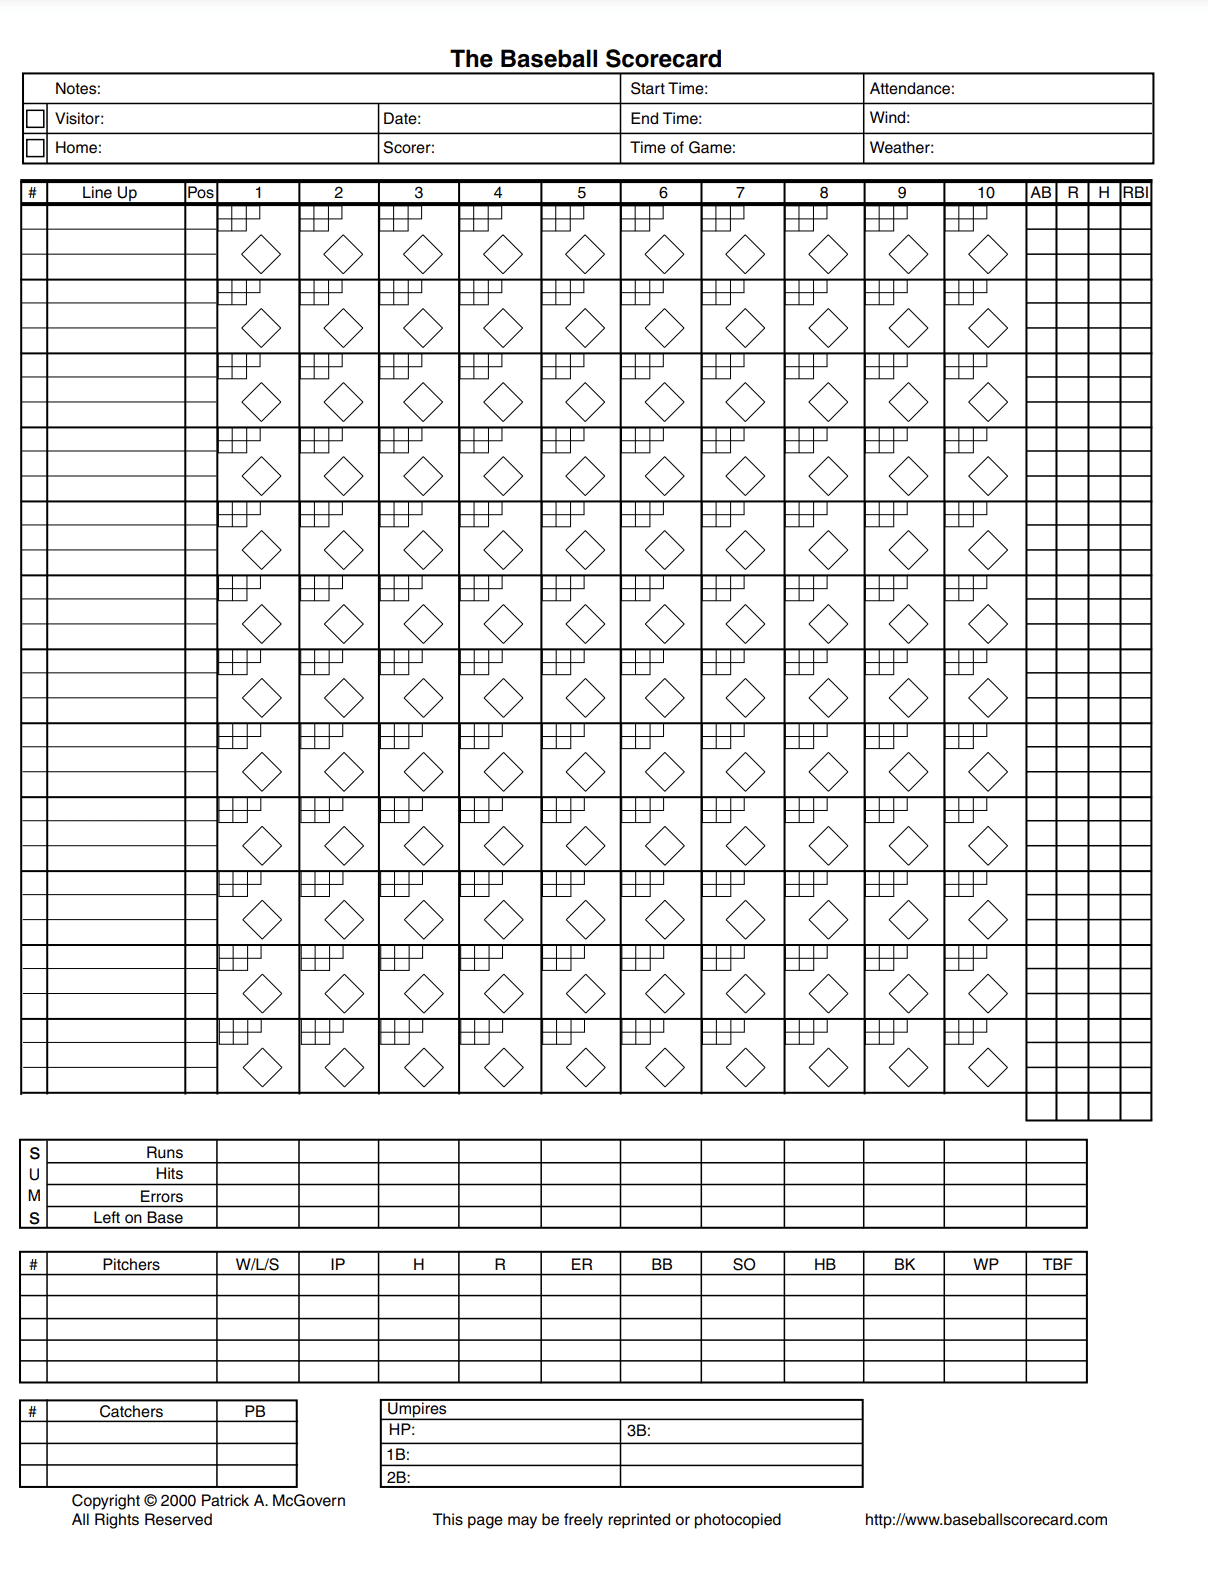 Patrick A. McGovern baseball scorecard, detailed version. 